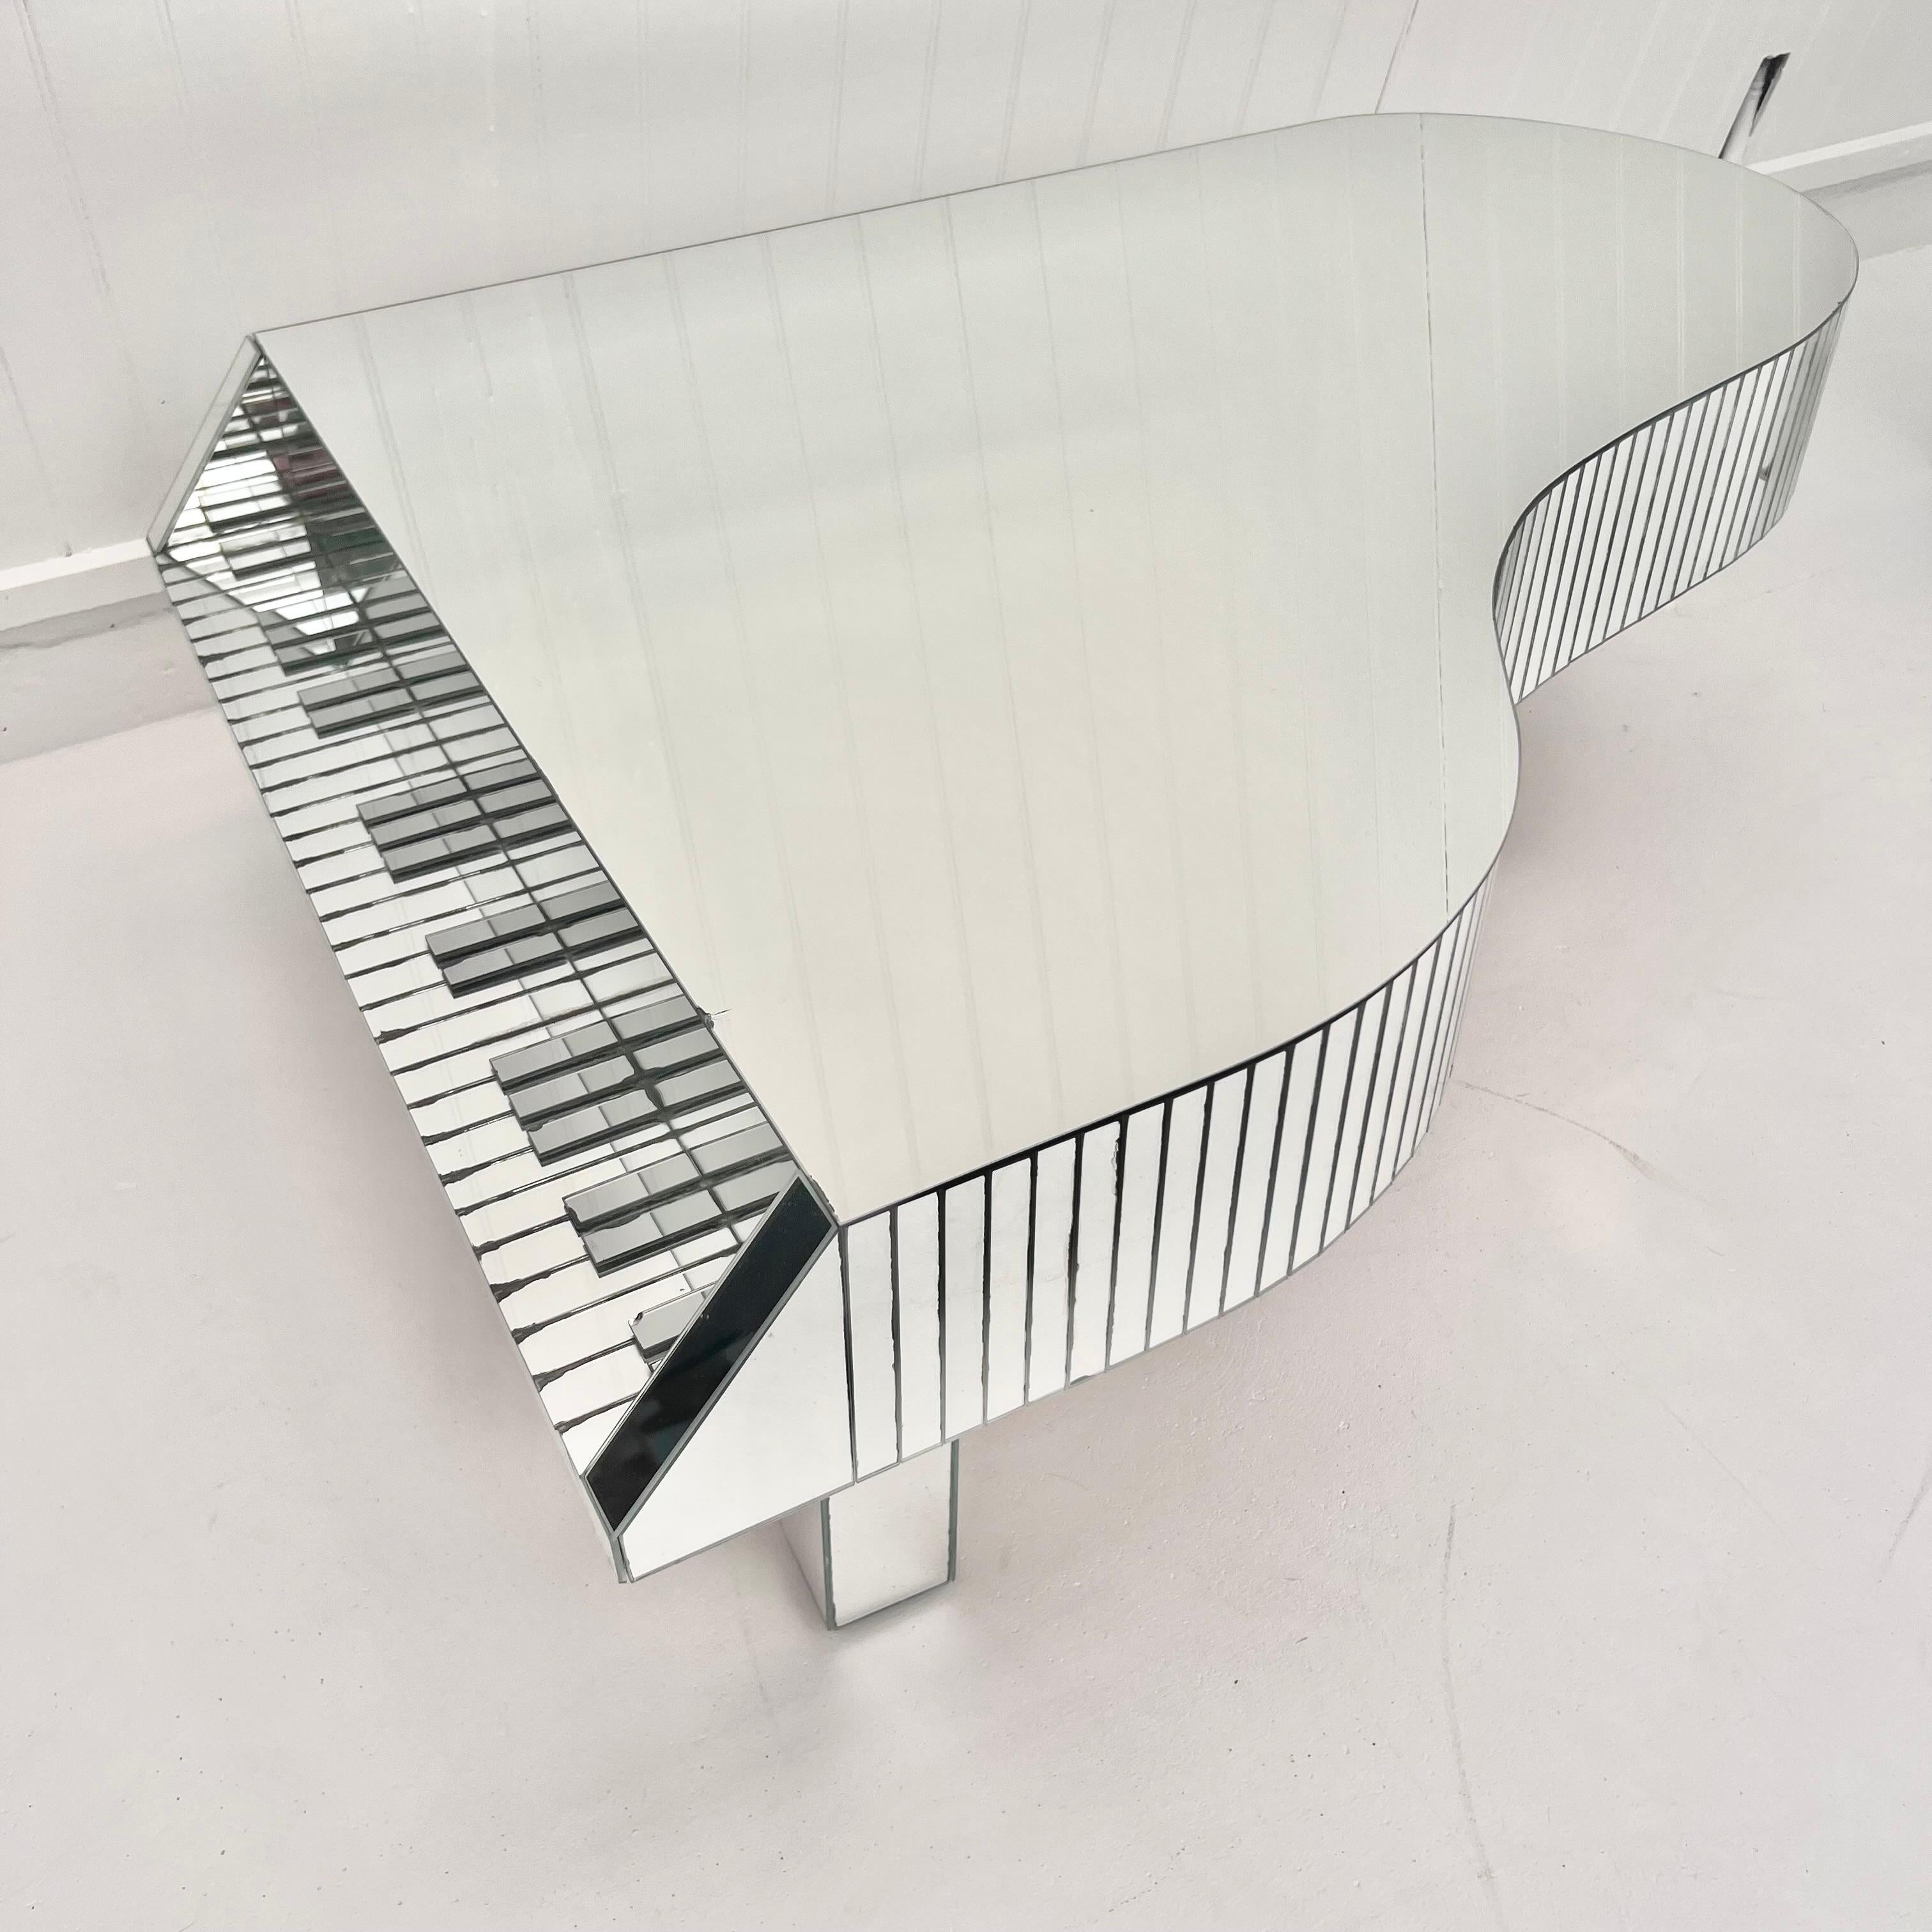 liberace mirrored piano